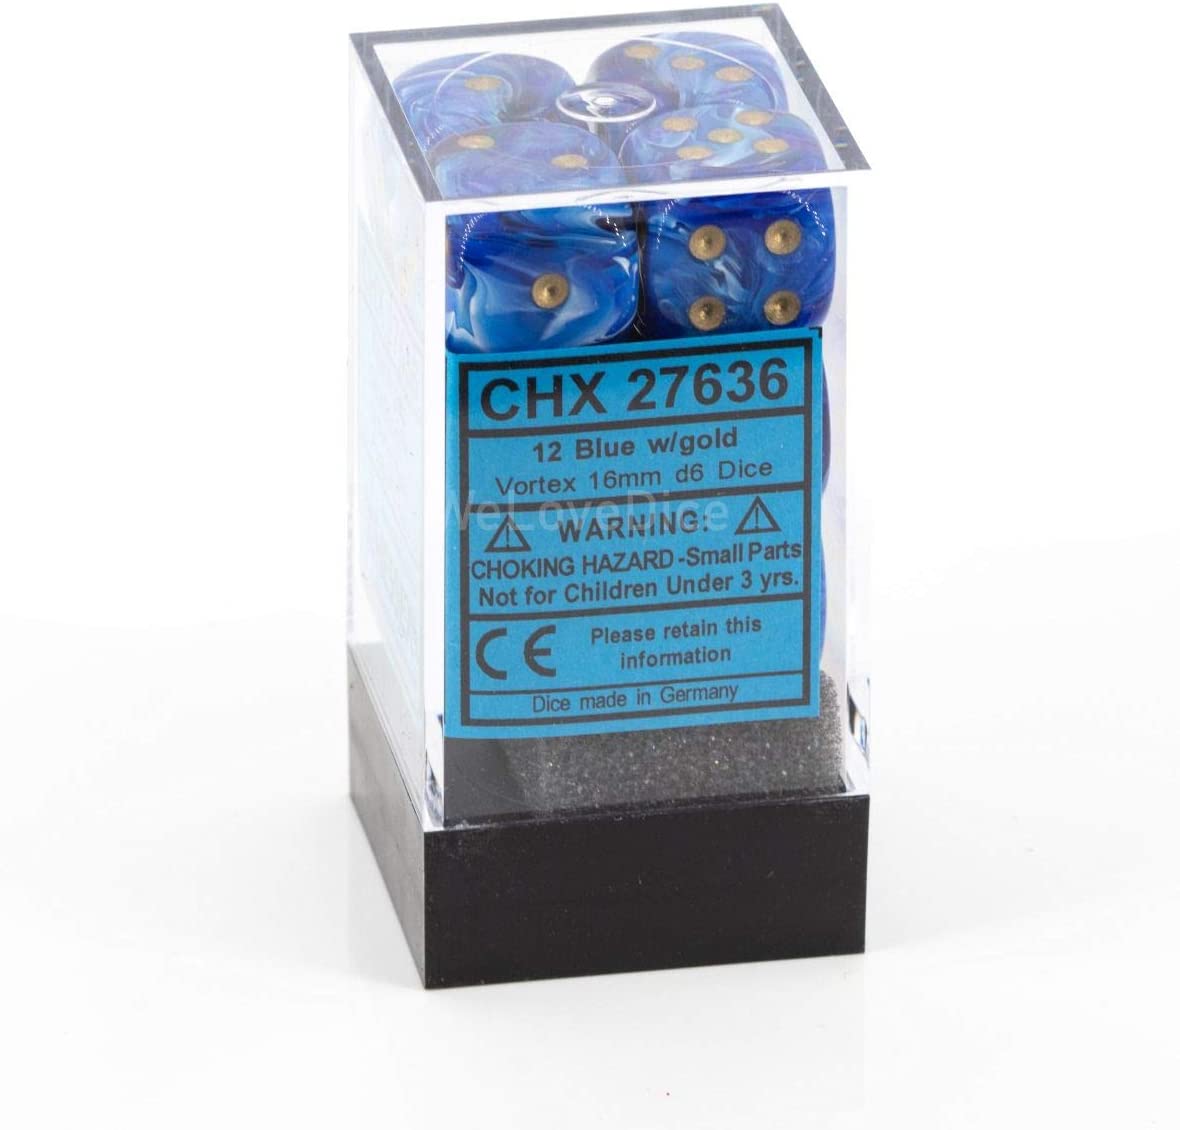 Chessex Dice: D6 Block 16mm - Vortex - Blue with Gold (CHX 27636) - Gamescape